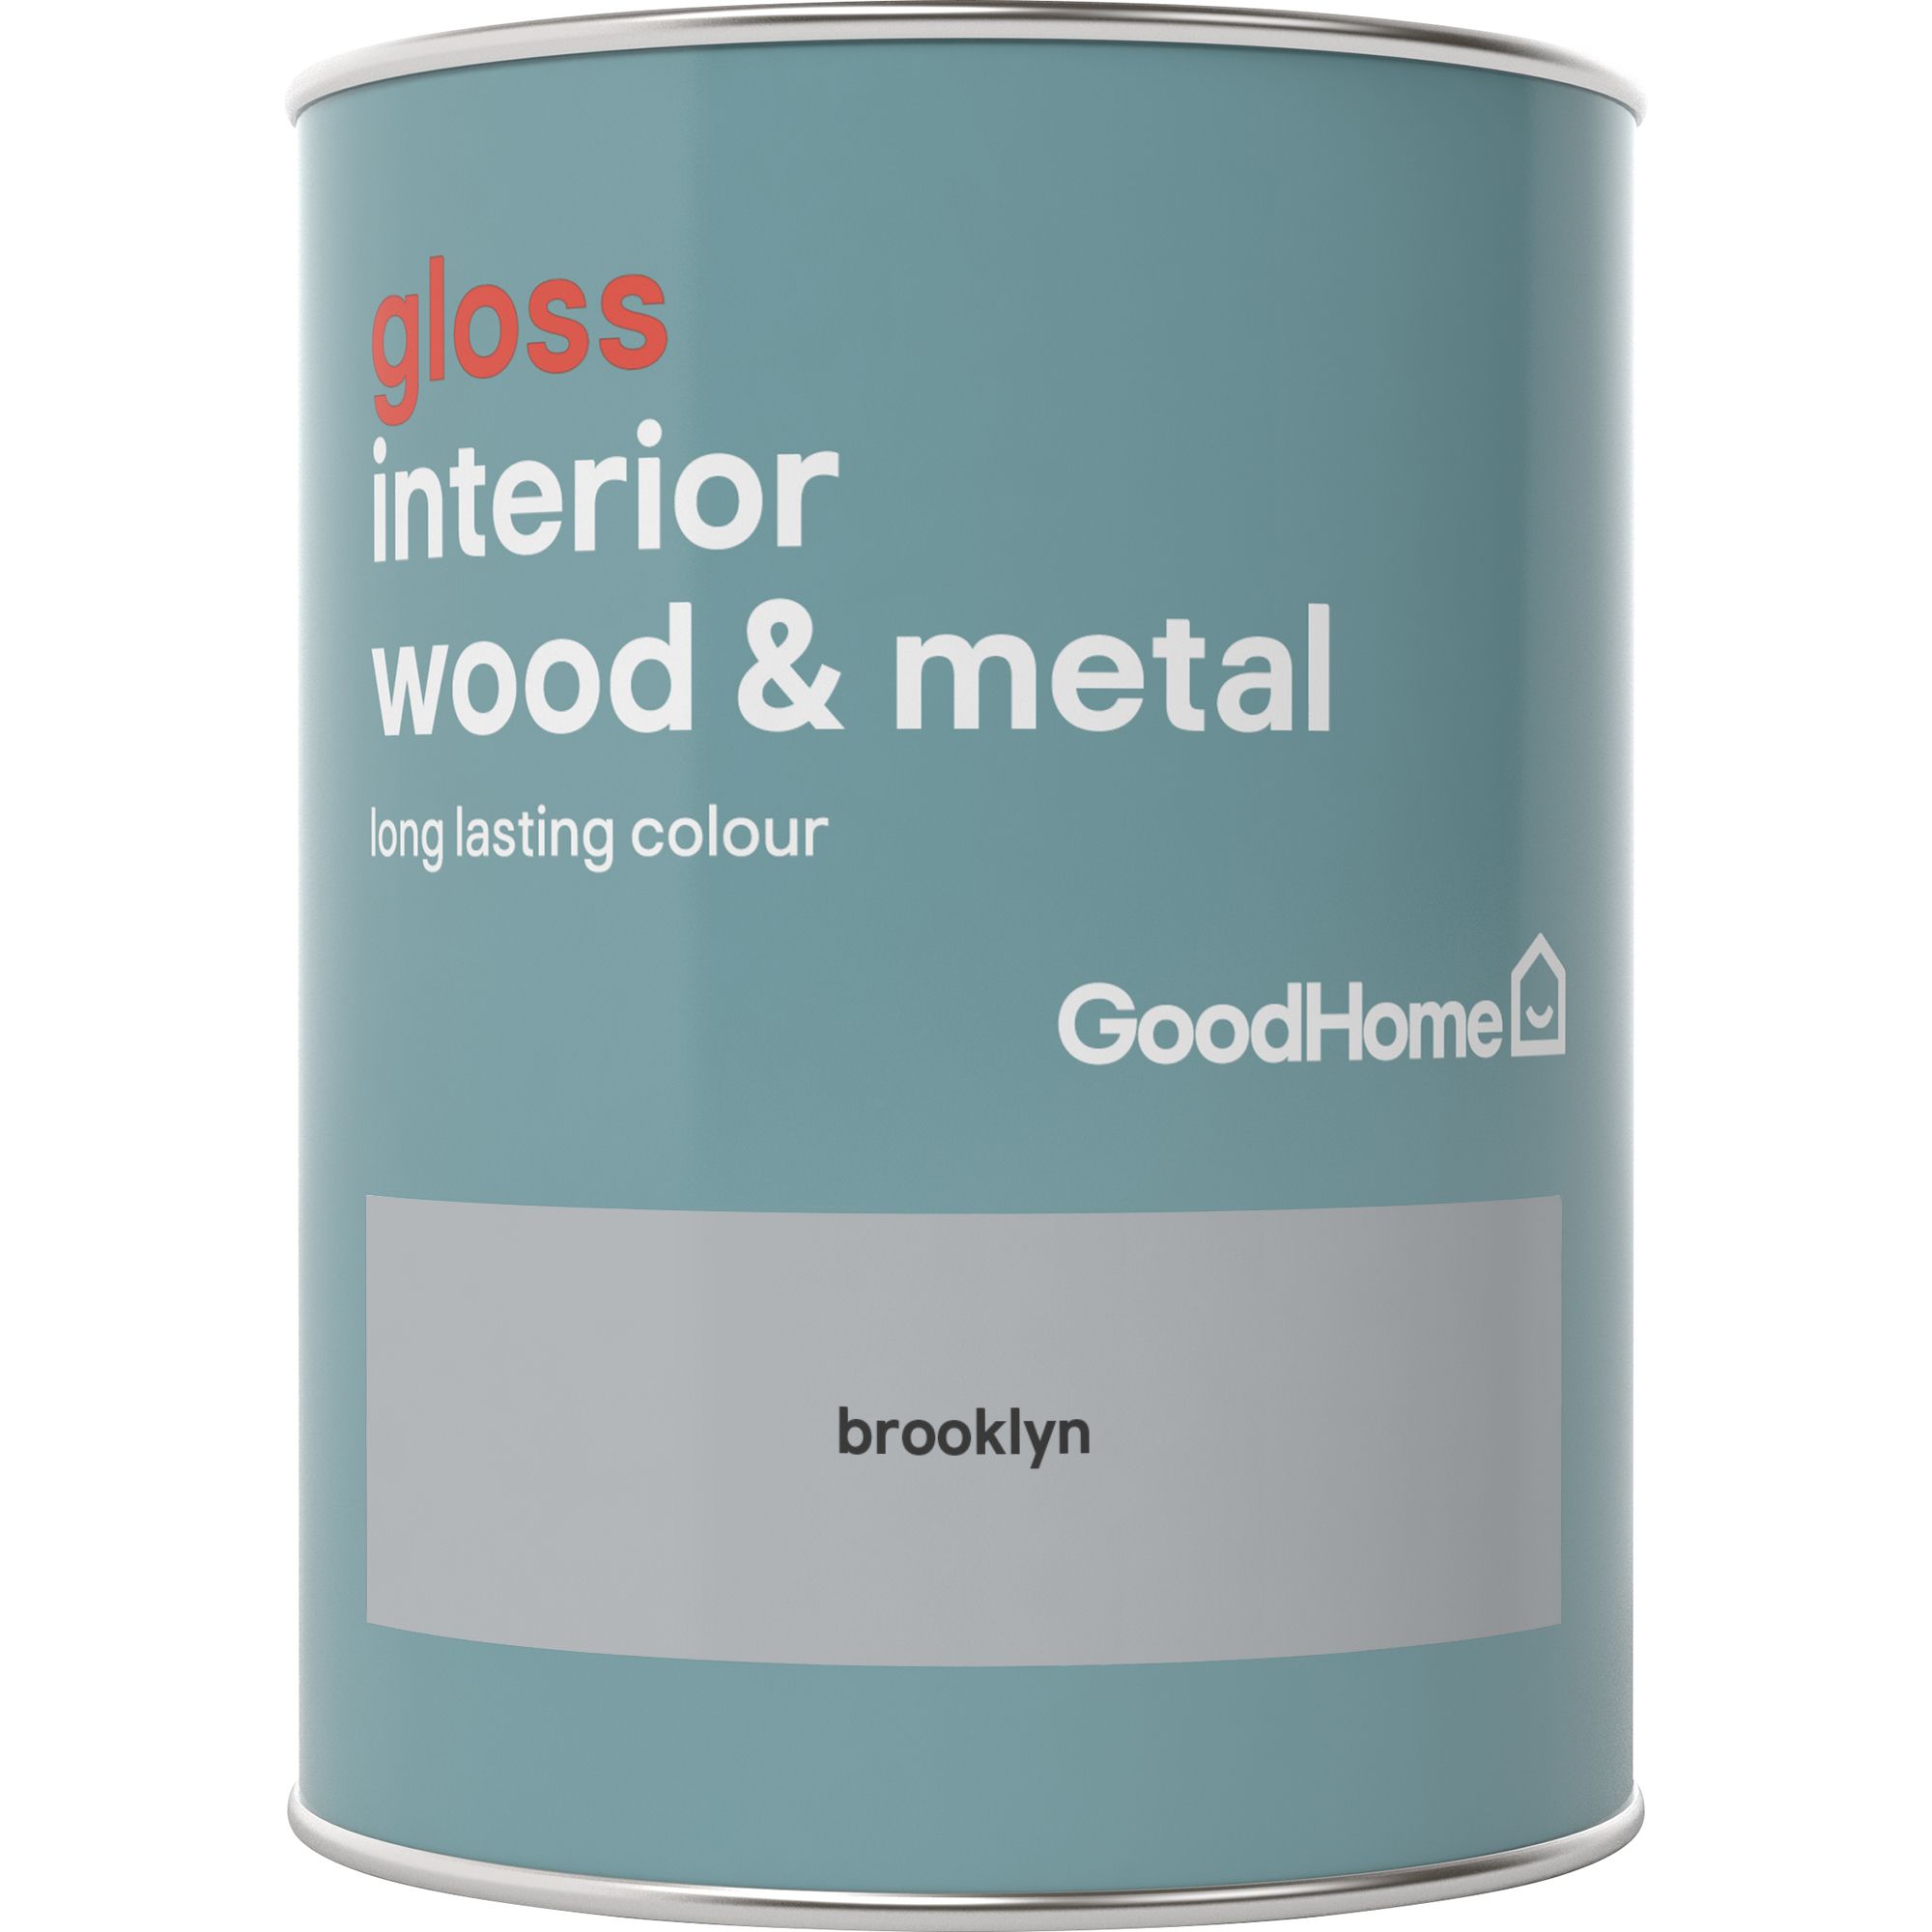 GoodHome Brooklyn Gloss Metal & wood paint, 750ml